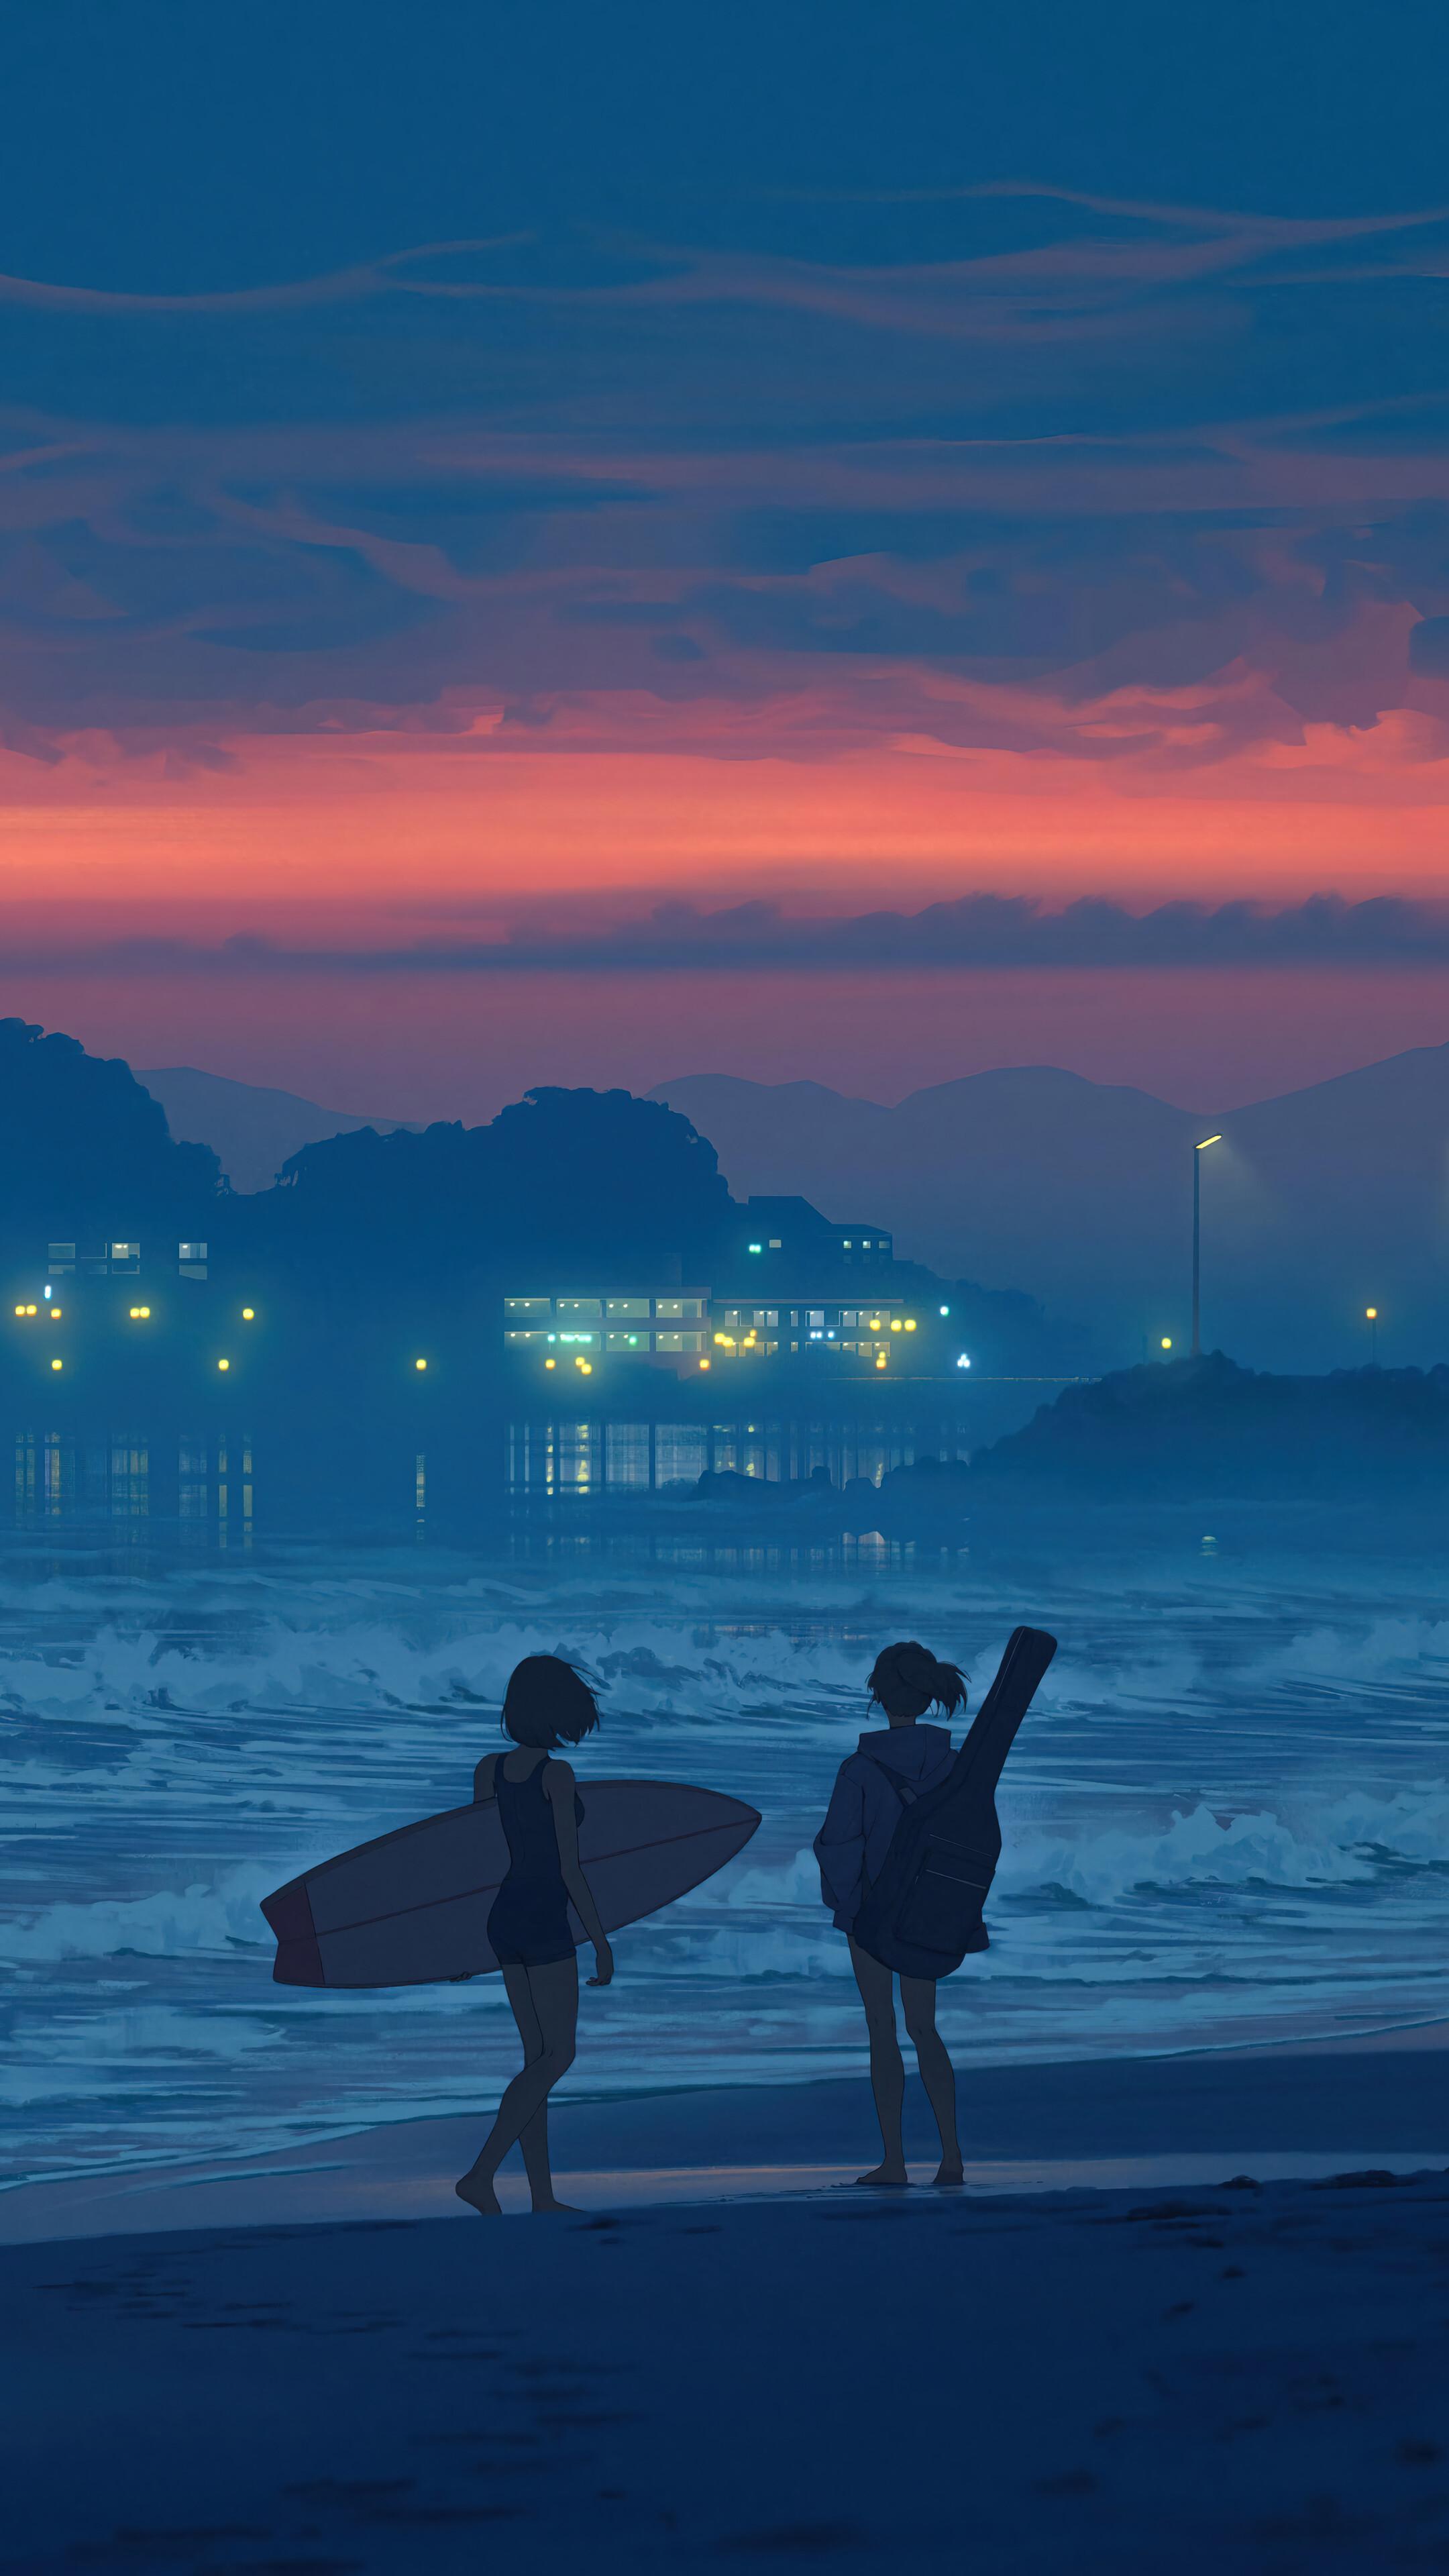 Anime Girls Beach Surfboard Sea Scenery Sunset 4k Wallpaper iPhone